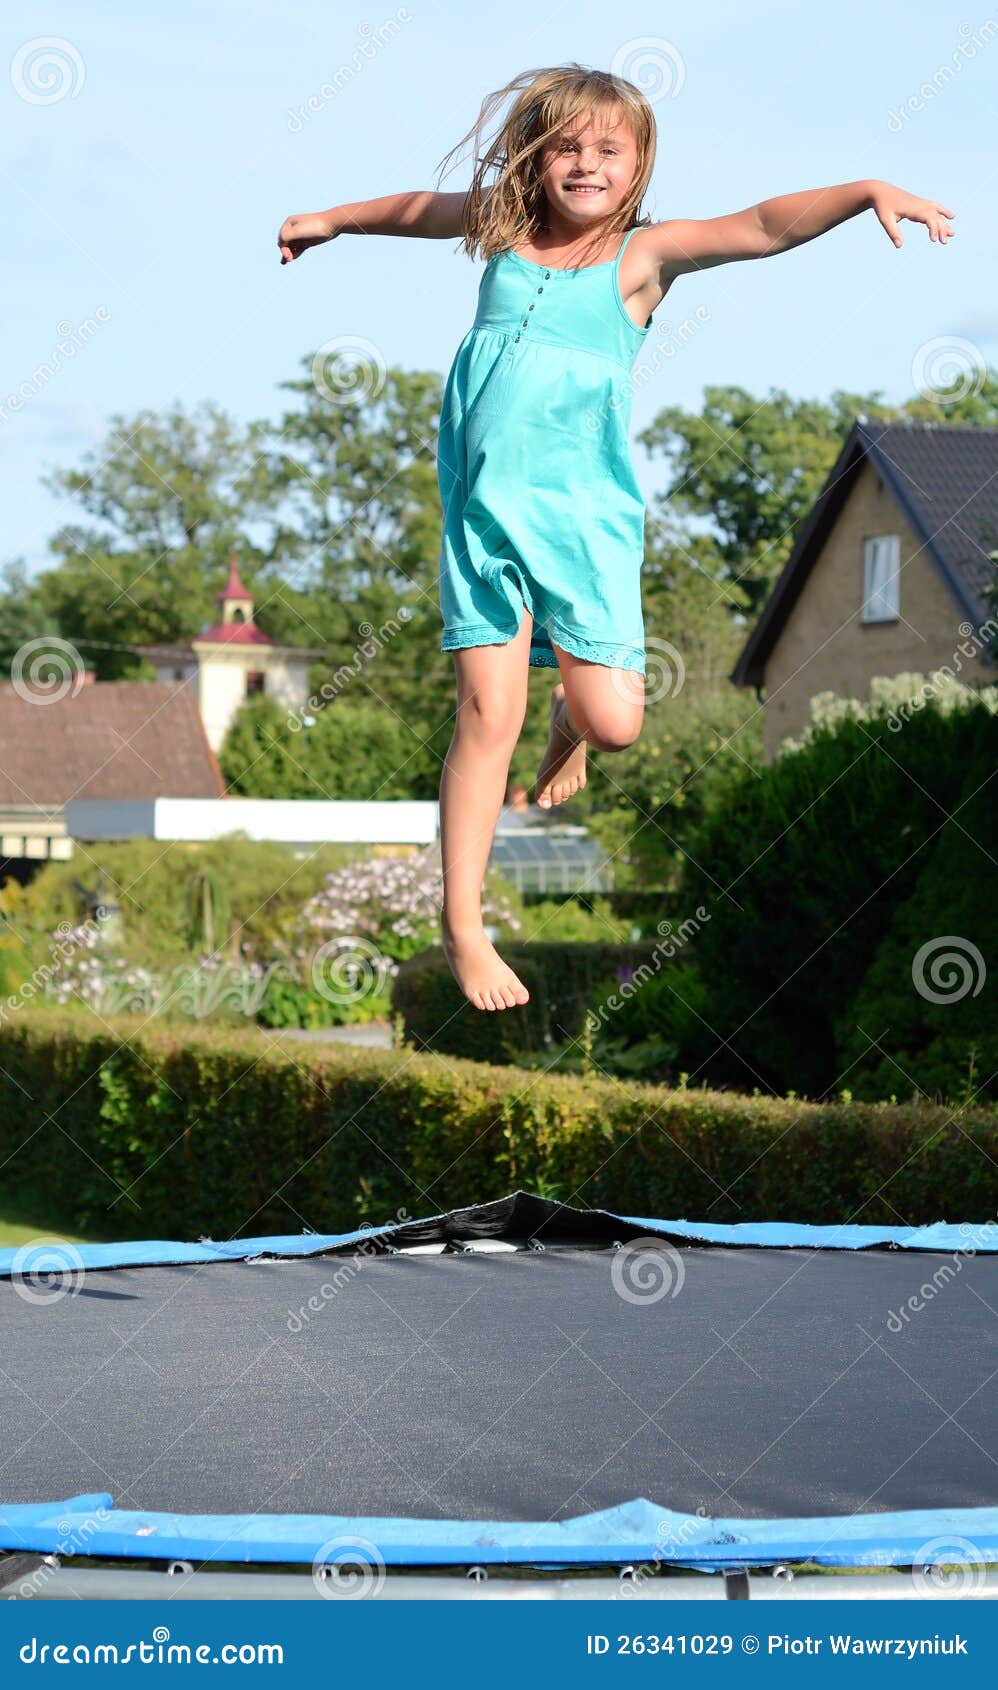 Girls fun outdoor. Cute young girl jump on garden trampoline